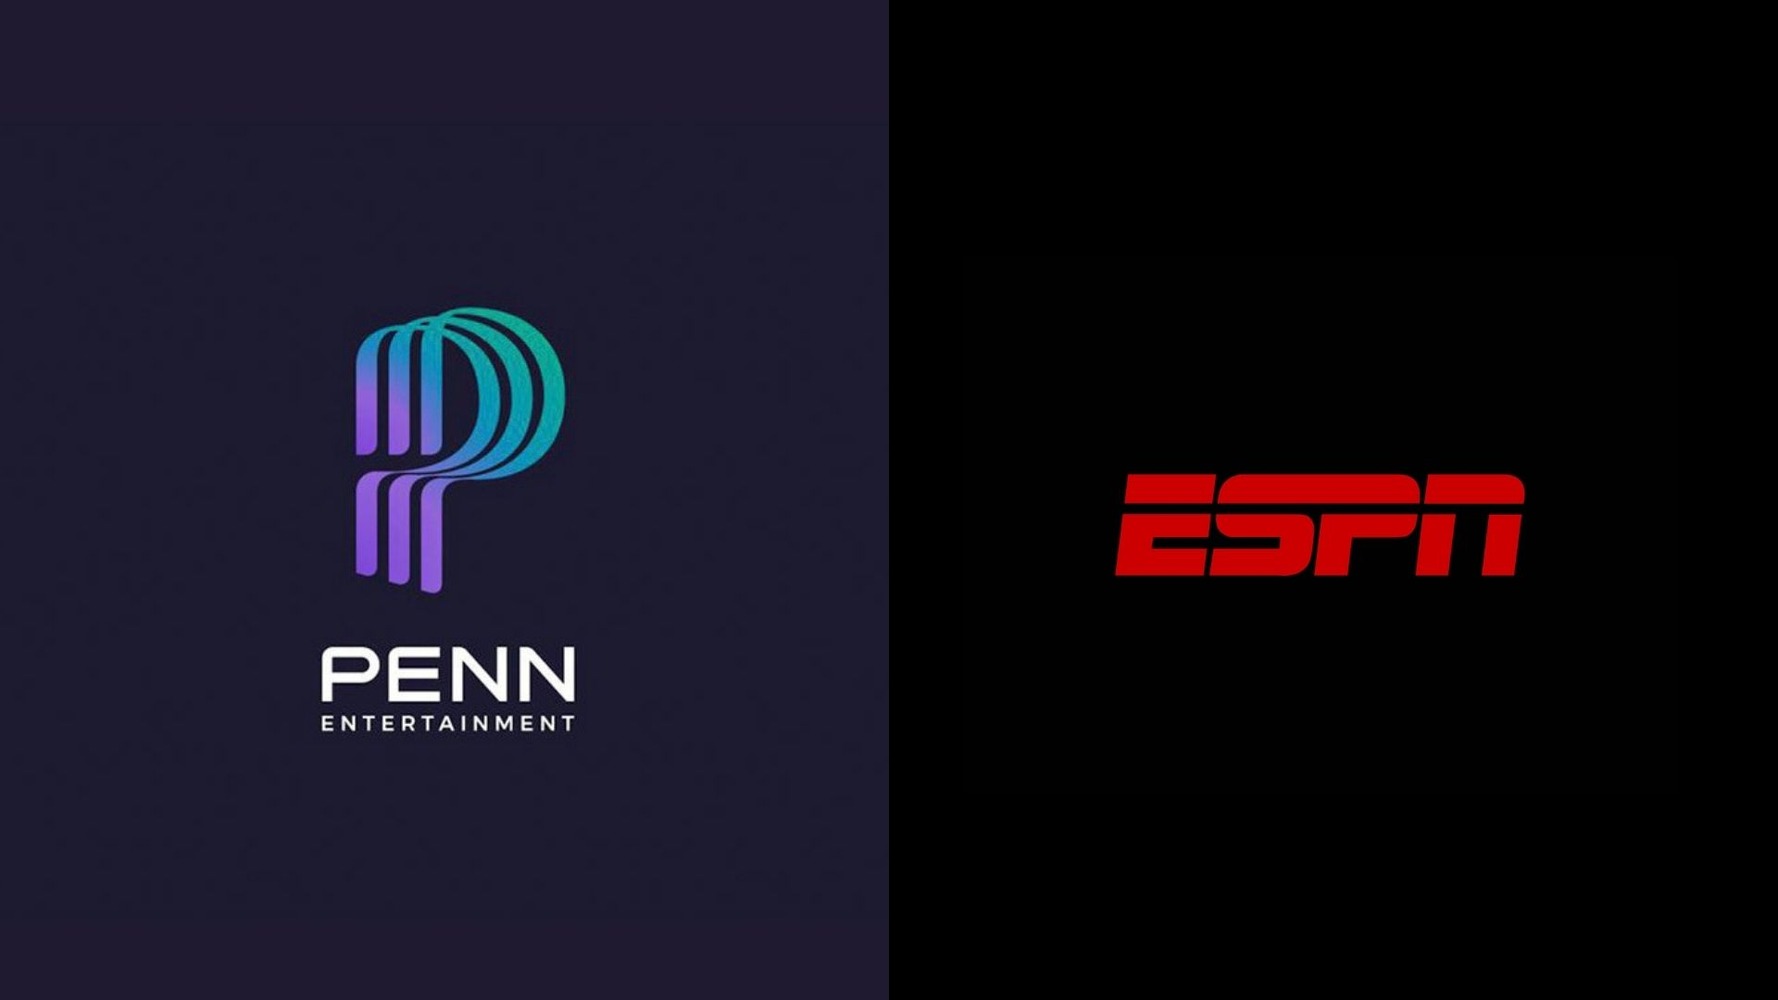 PENN + ESPN